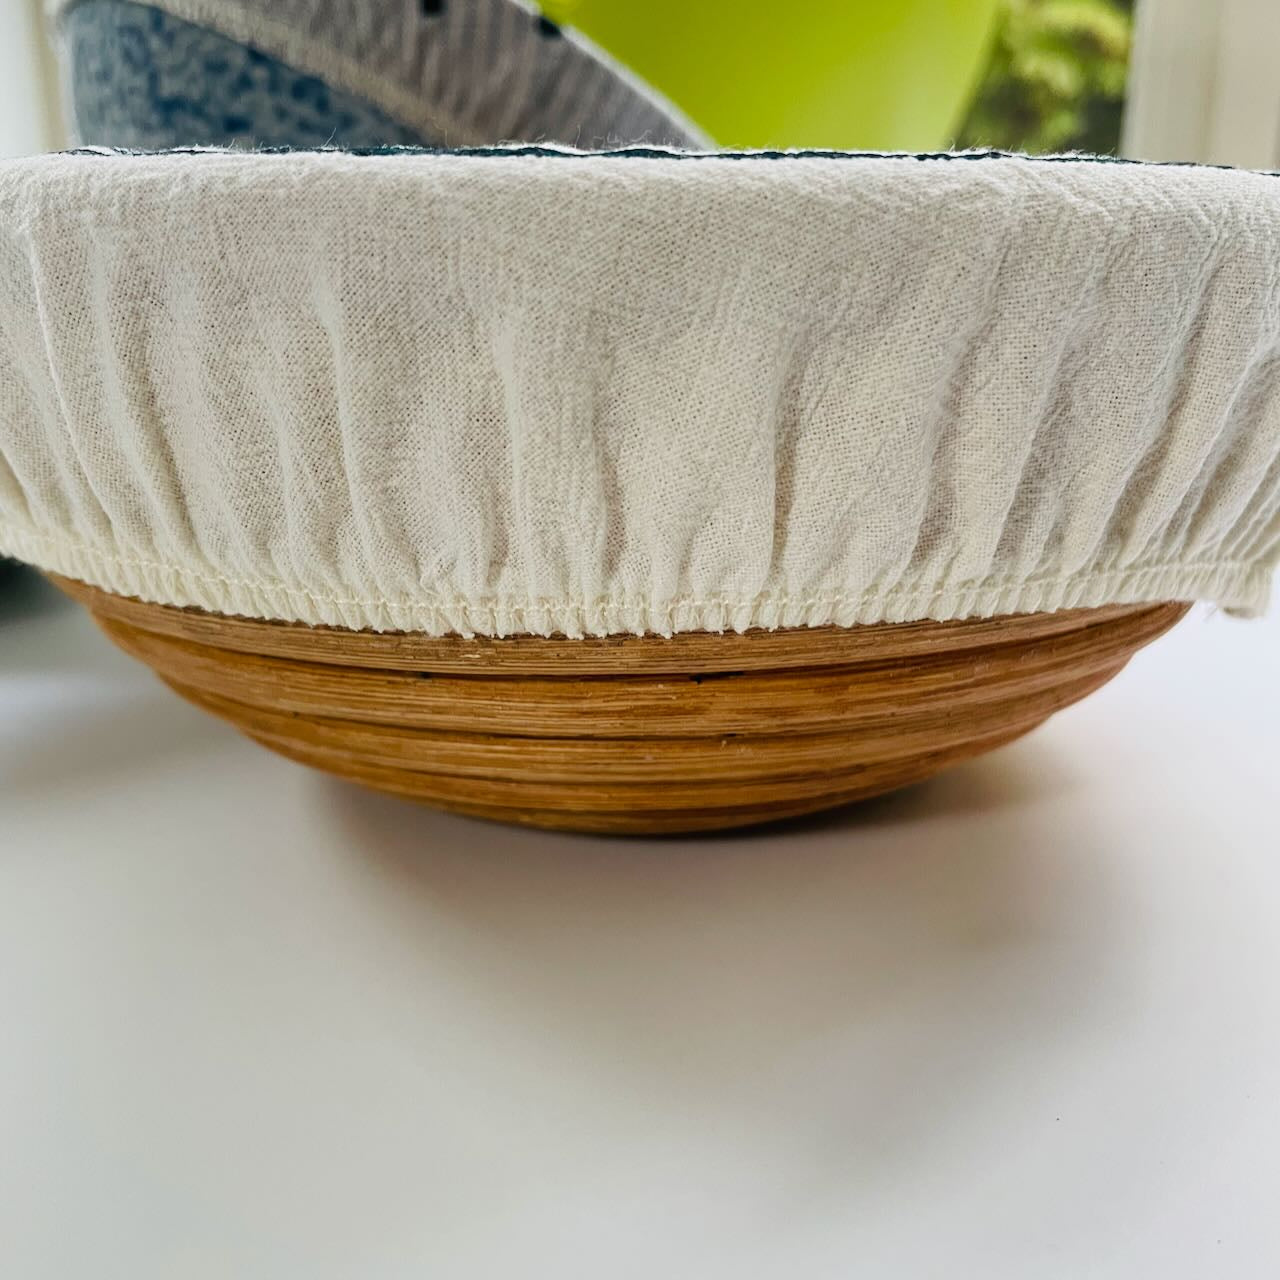 Reusable Fabric Bowl Covers: Medium 8.5"